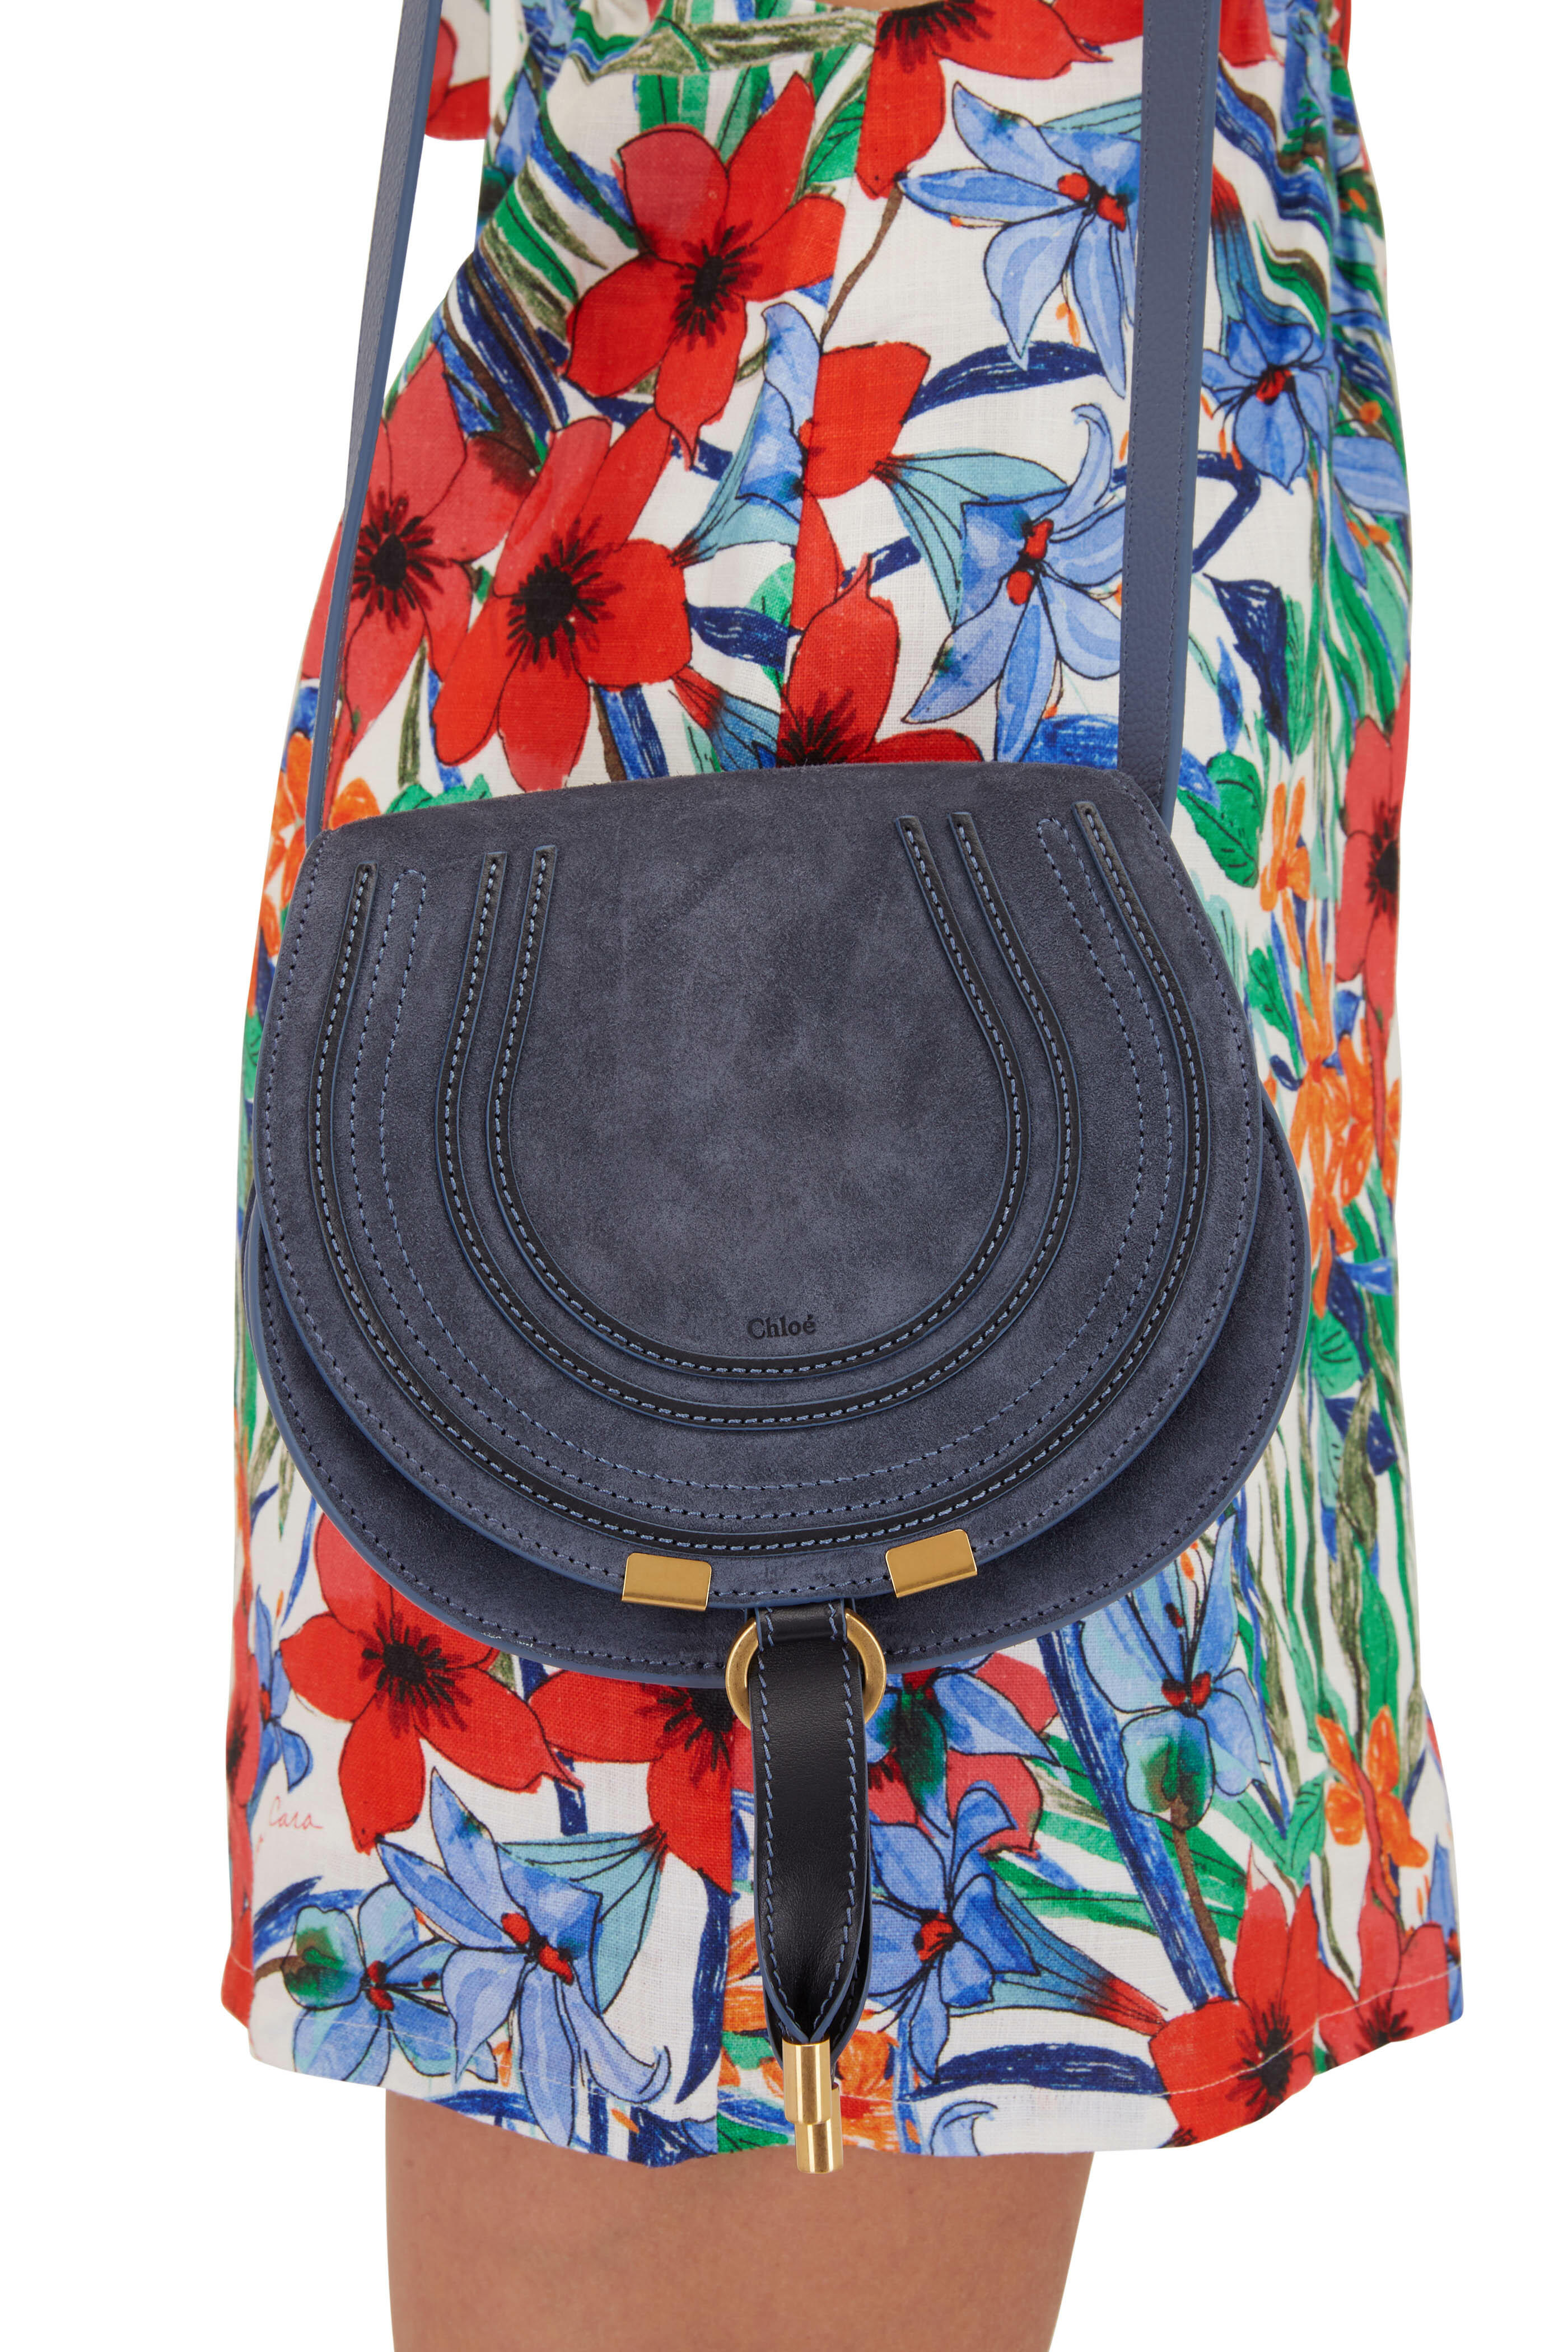 Chloé Marcie Mini Leather Cross-body Bag in Blue